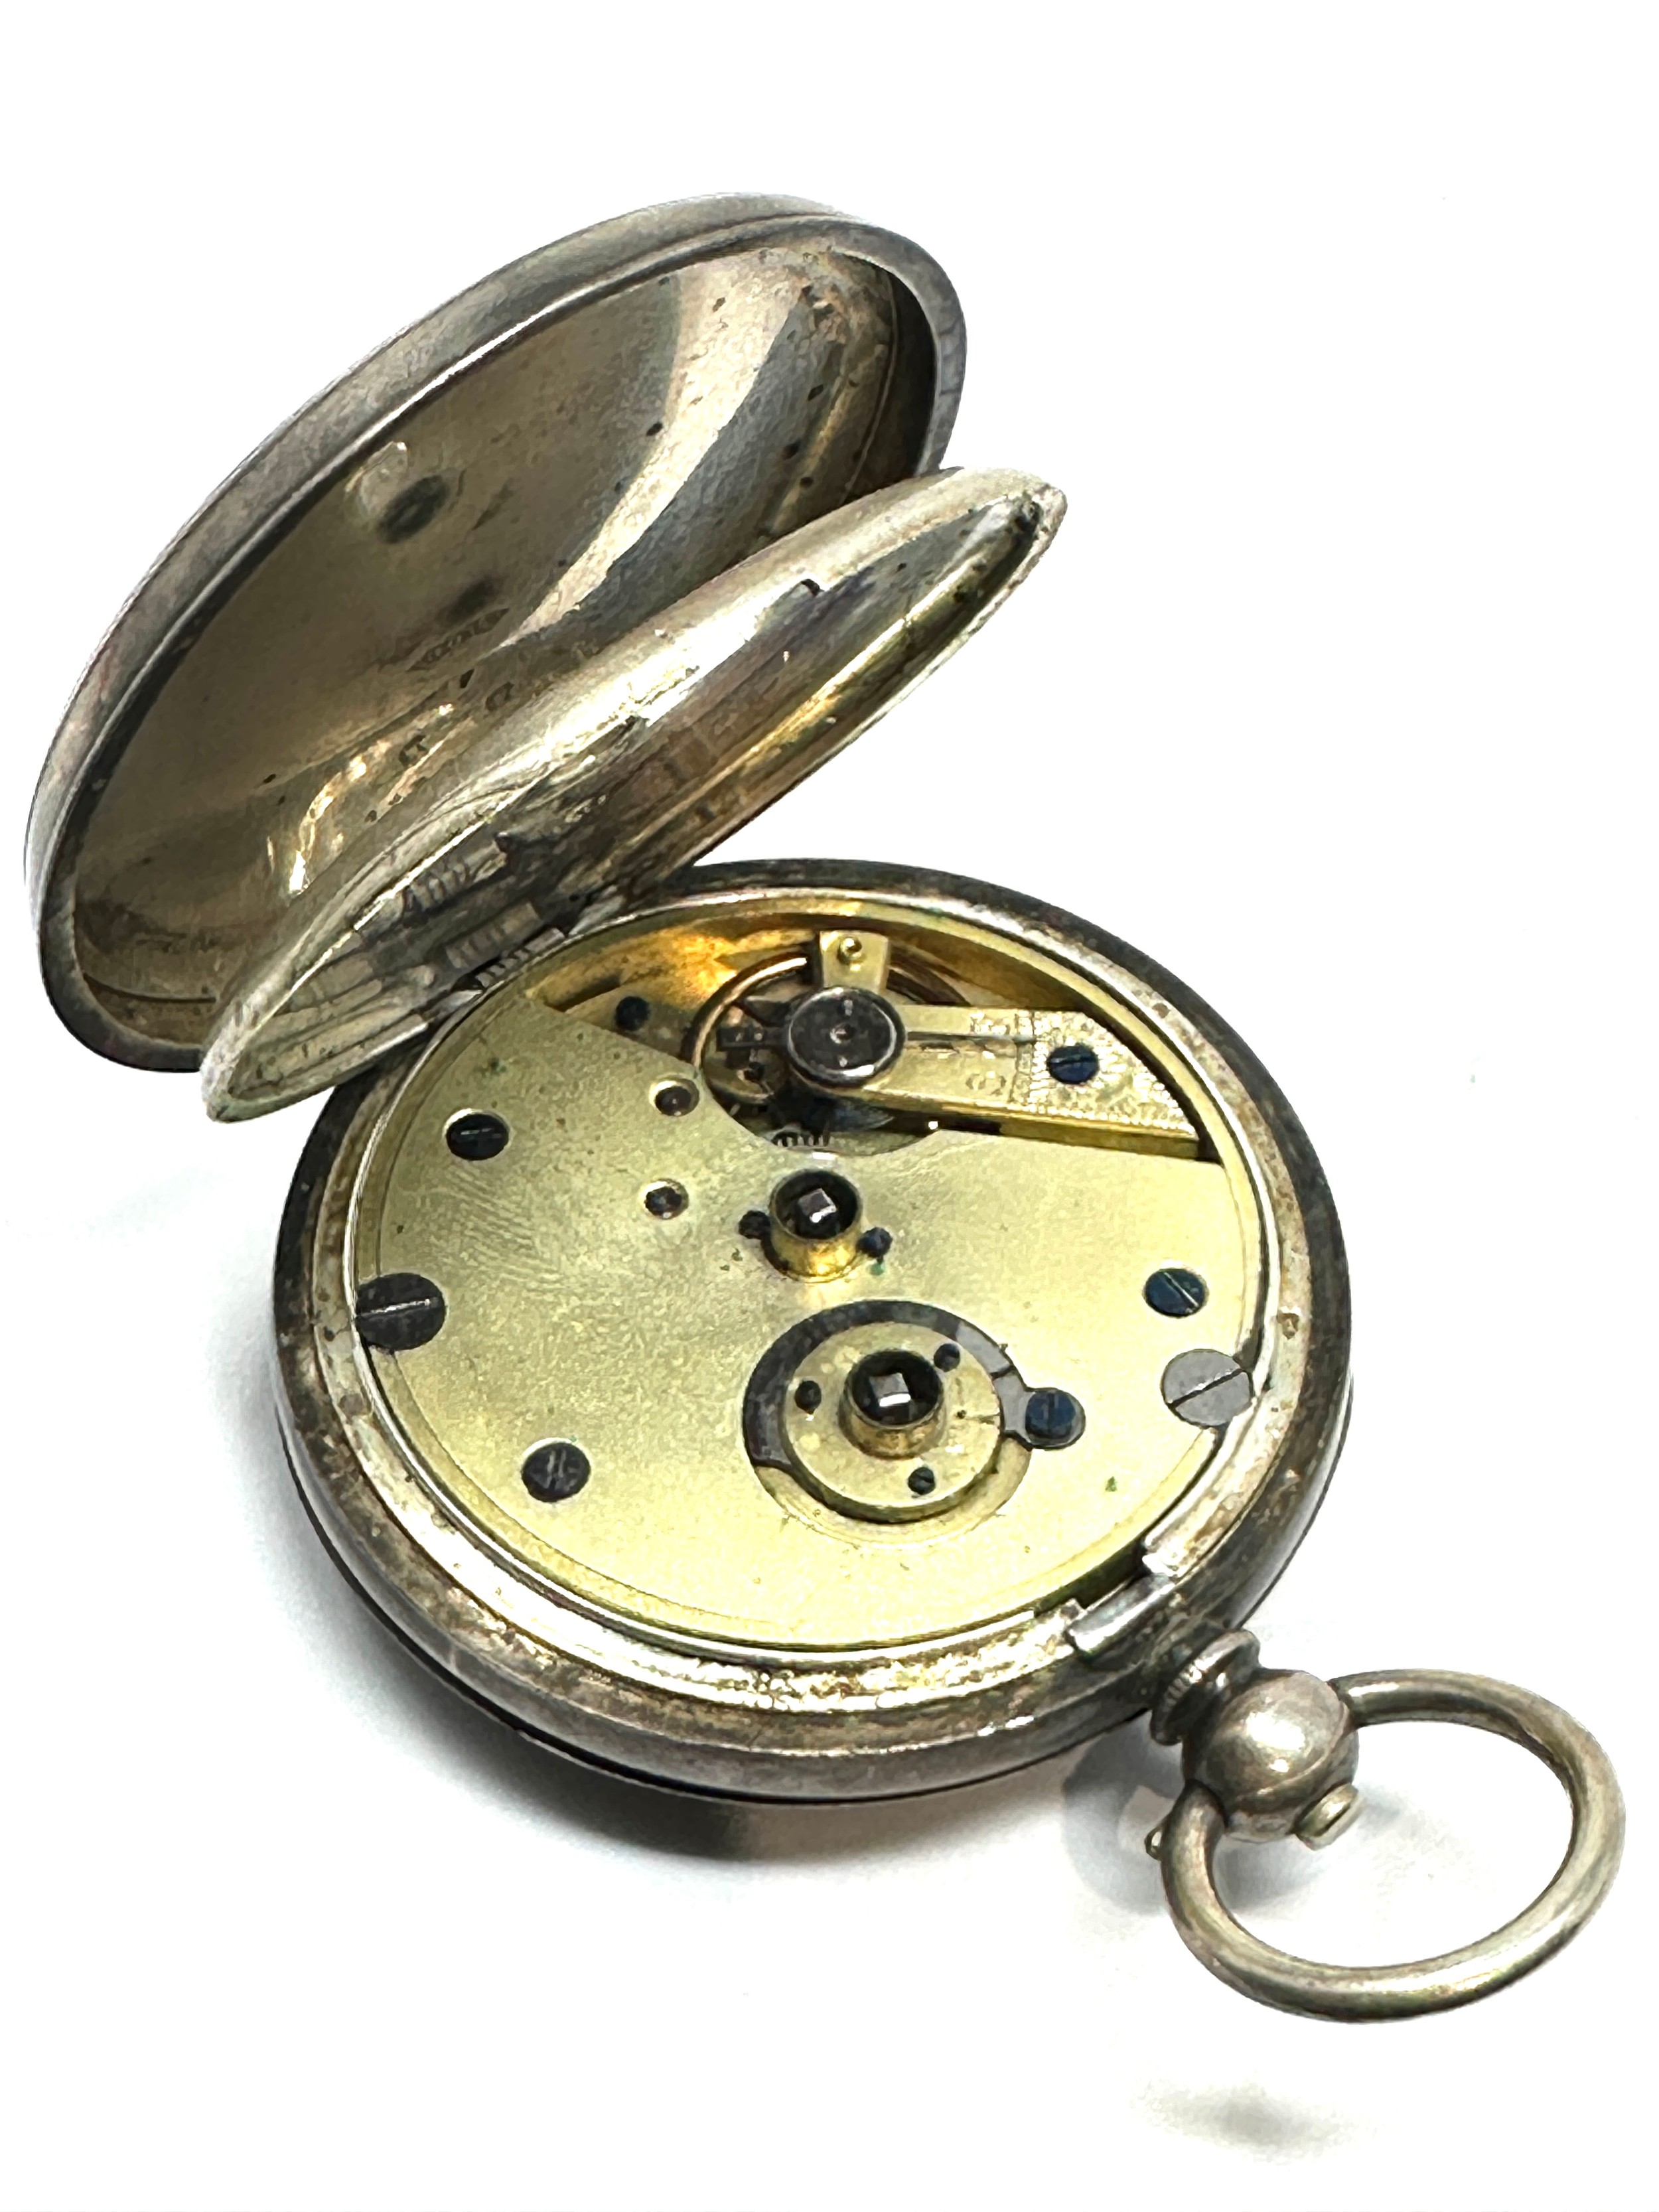 Vintage Gents Sterling Silver Pocket Watch Key-wind Working - Image 3 of 3